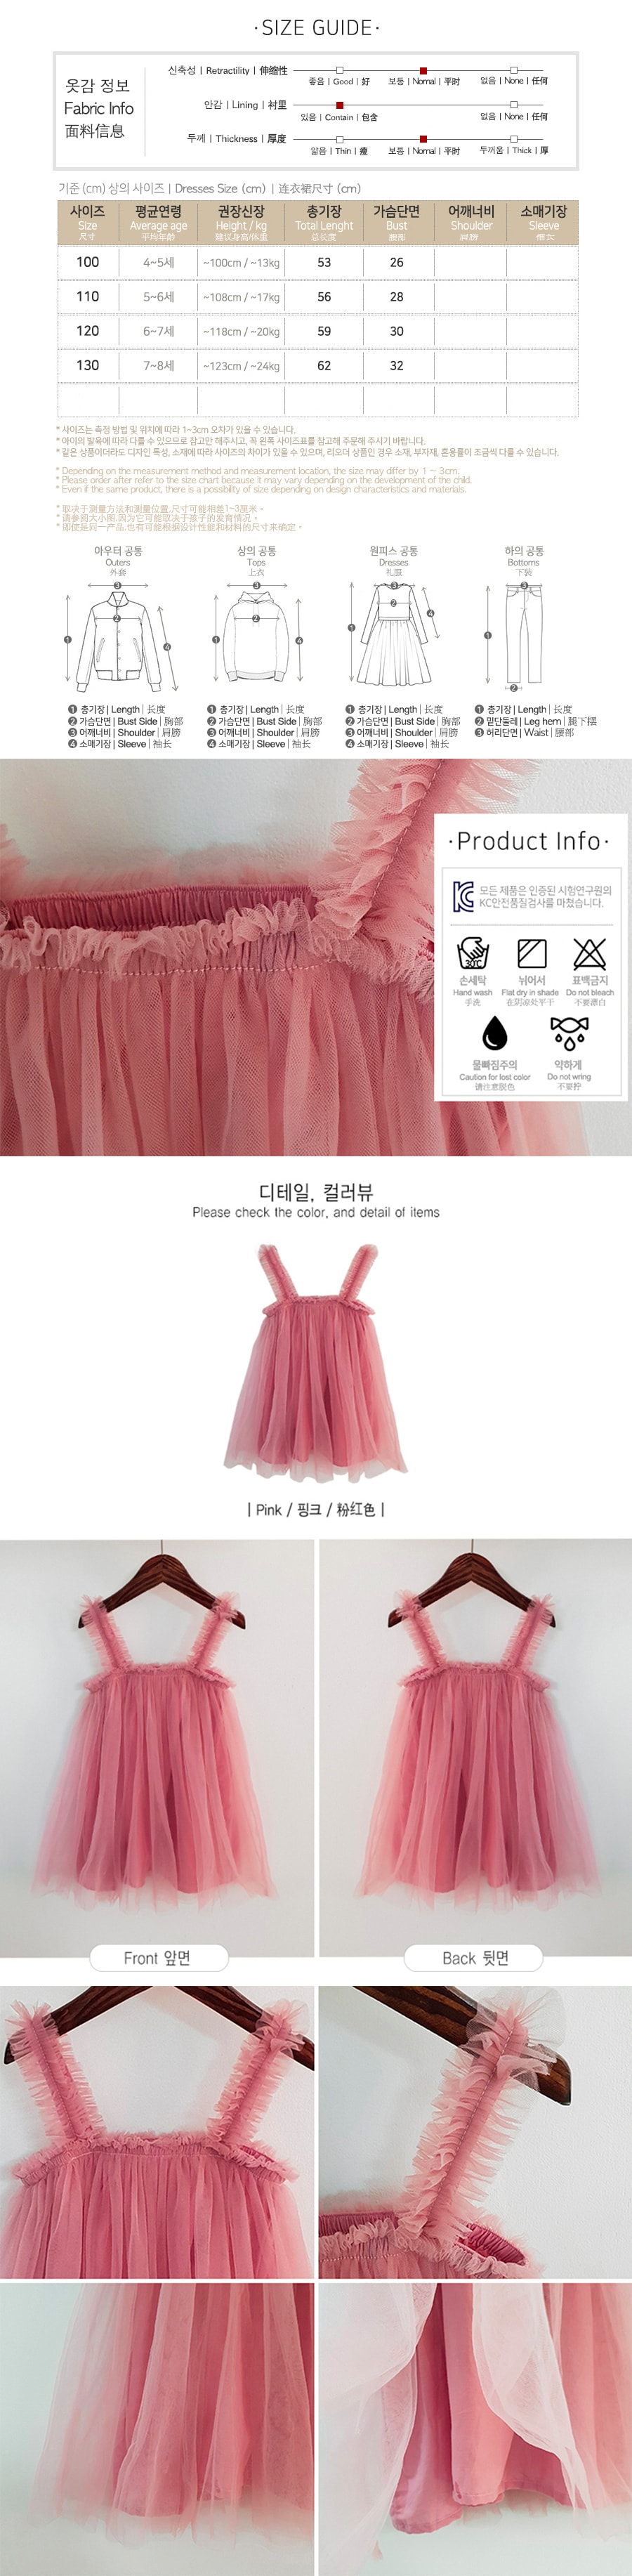 Kid Girl Ruffle Tulle Dress #Pink 110(5-6years)